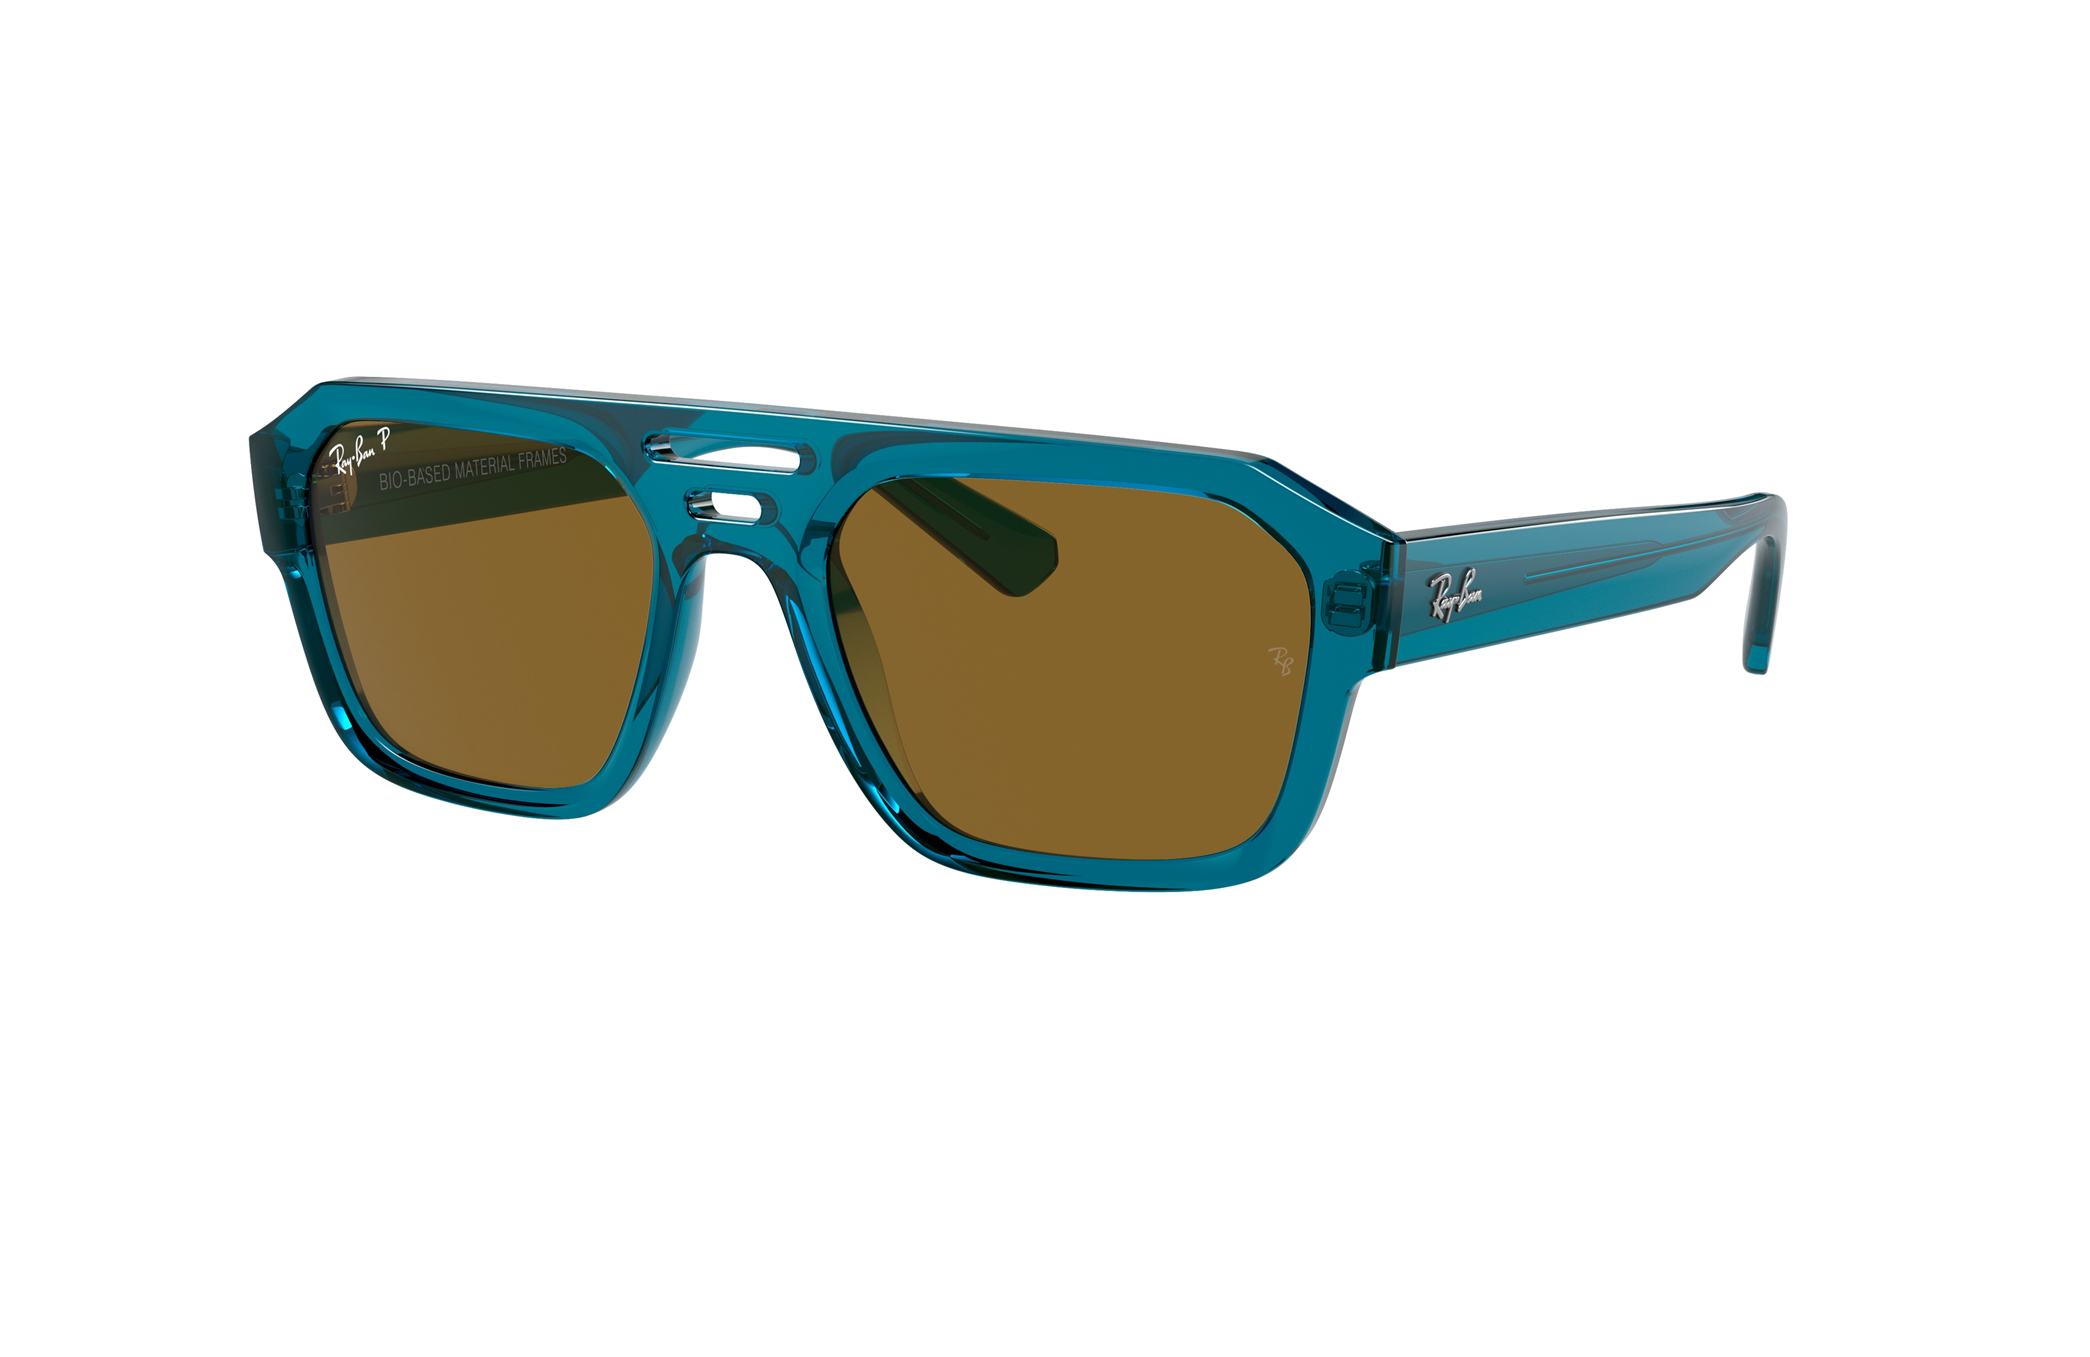 LIOUMO New Design 3 In 1 Magnetic Clip On Glasses High Quality Polarized  Sunglasses Men Women Anti-Glare Eyewear gafas de sol